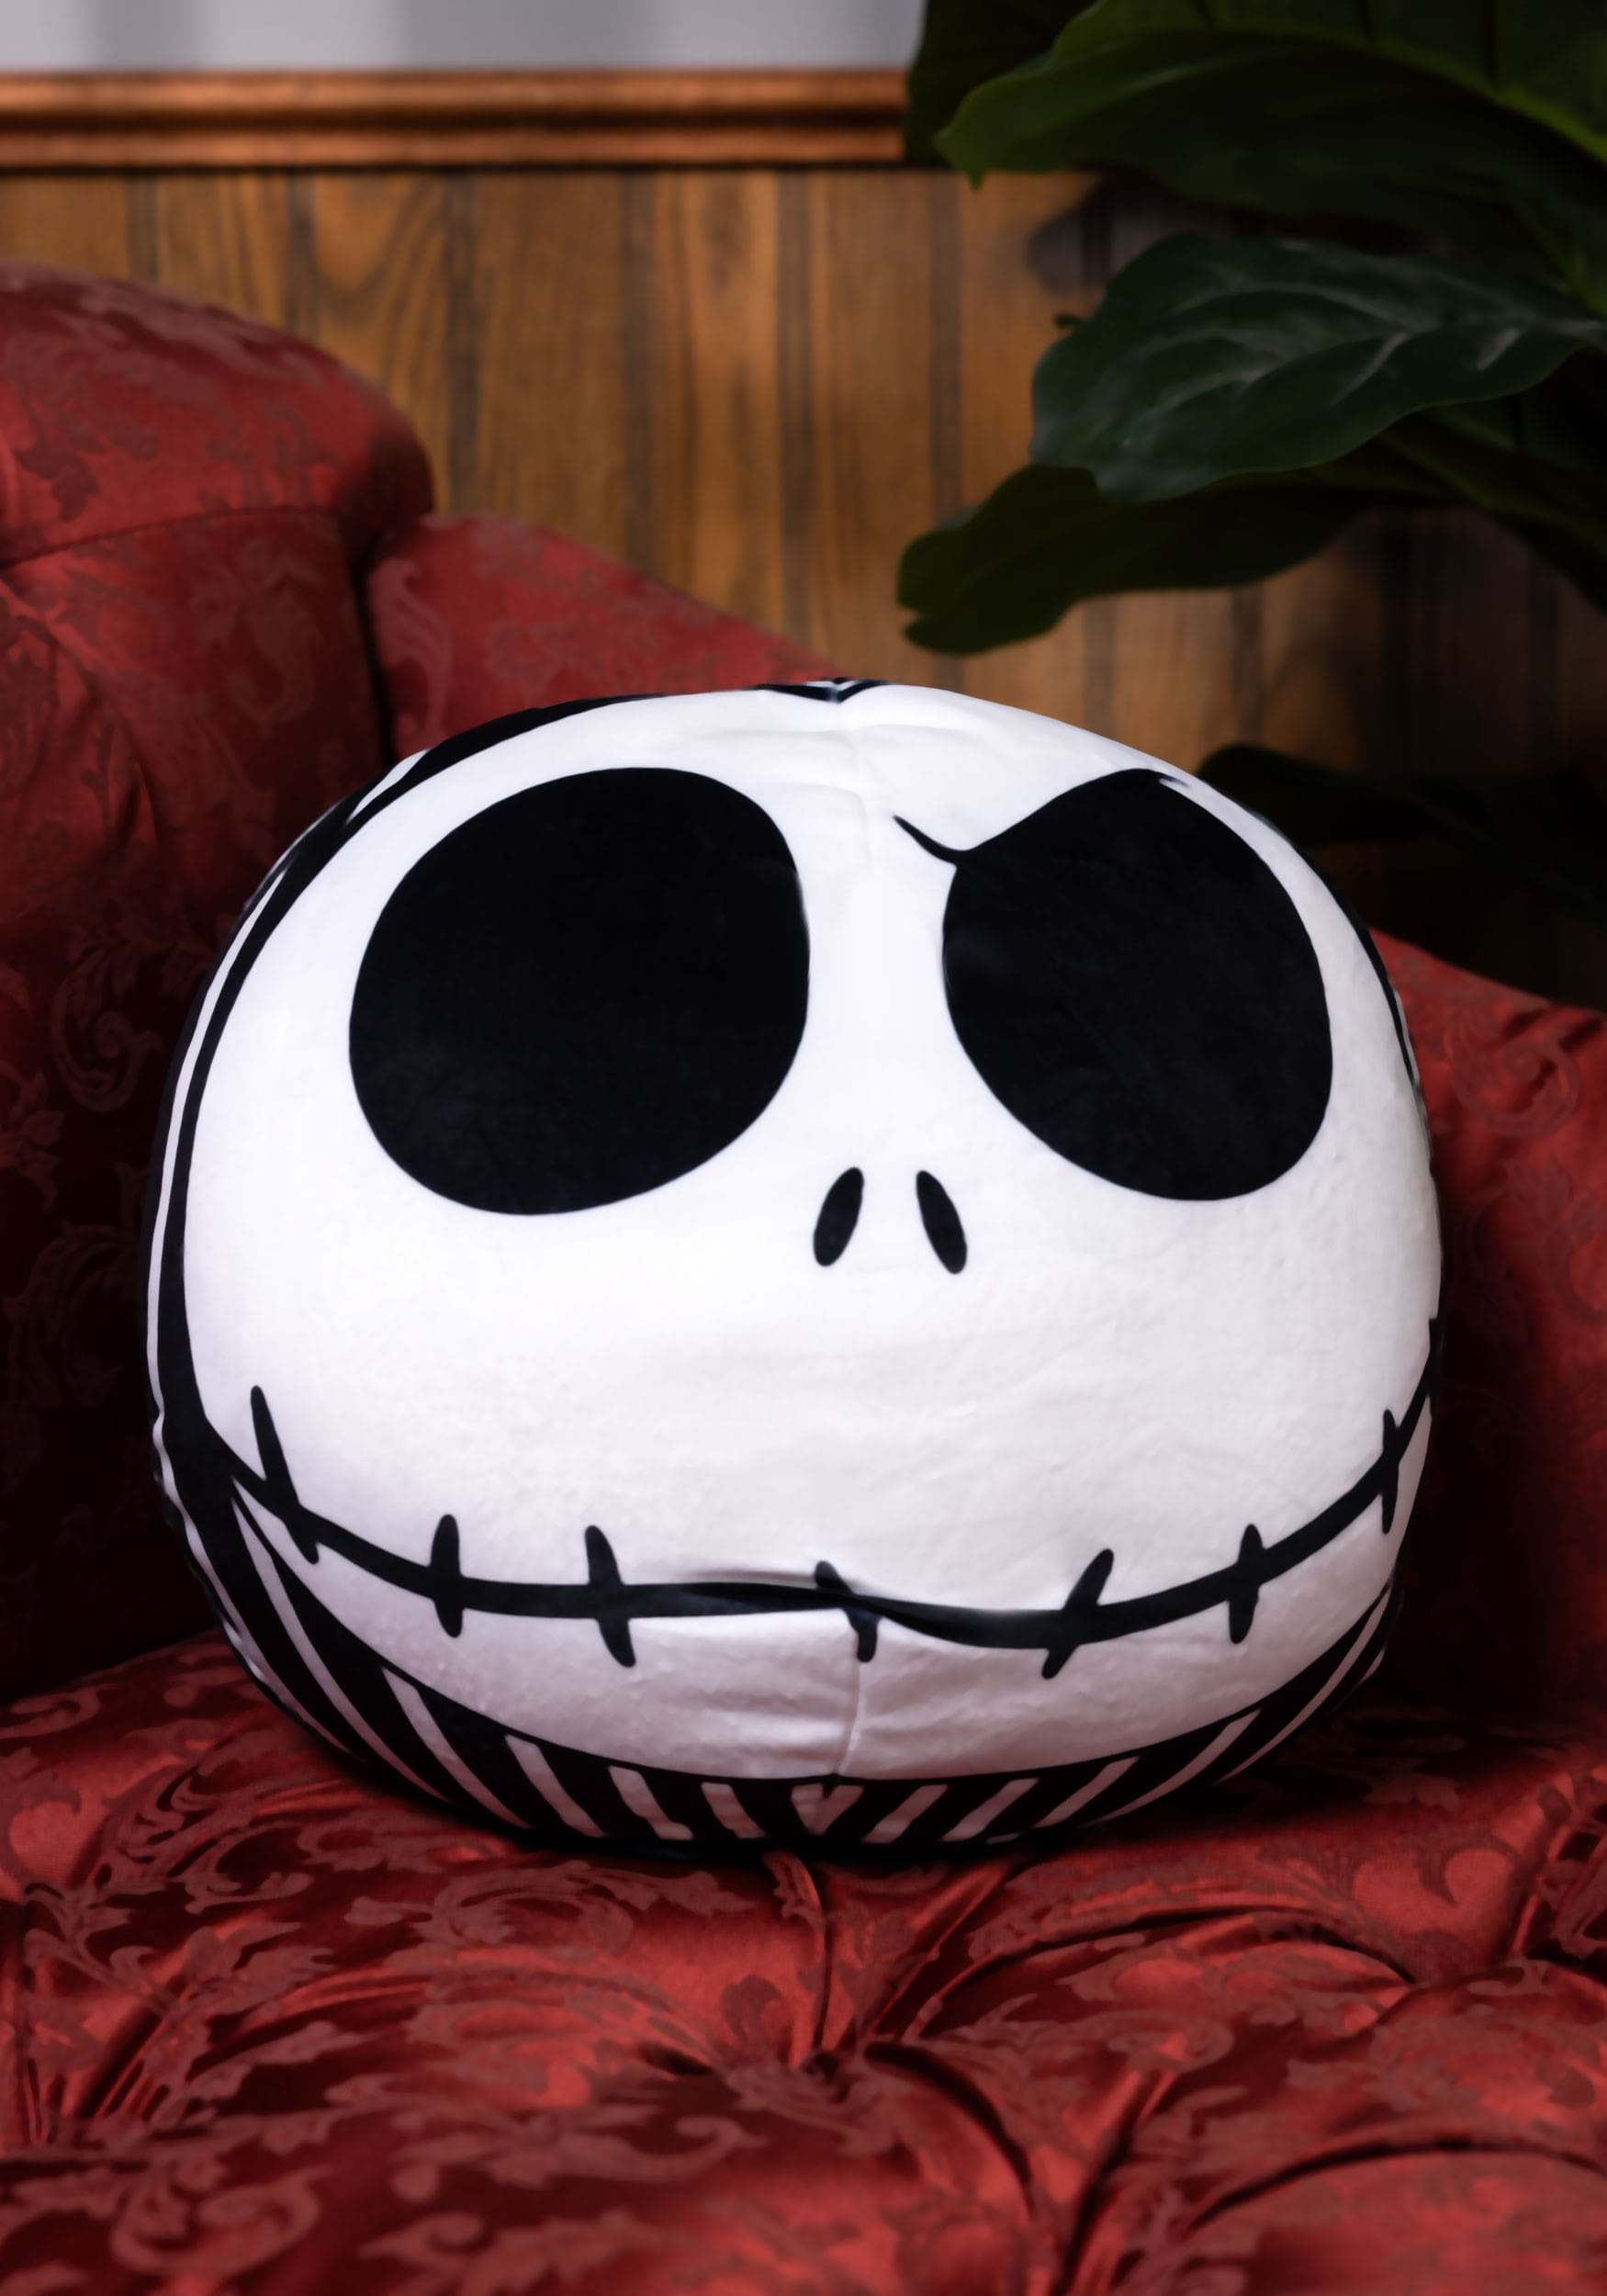 Disney Jack Skellington Pillow The Nightmare Before Christmas Plush Cool Gift